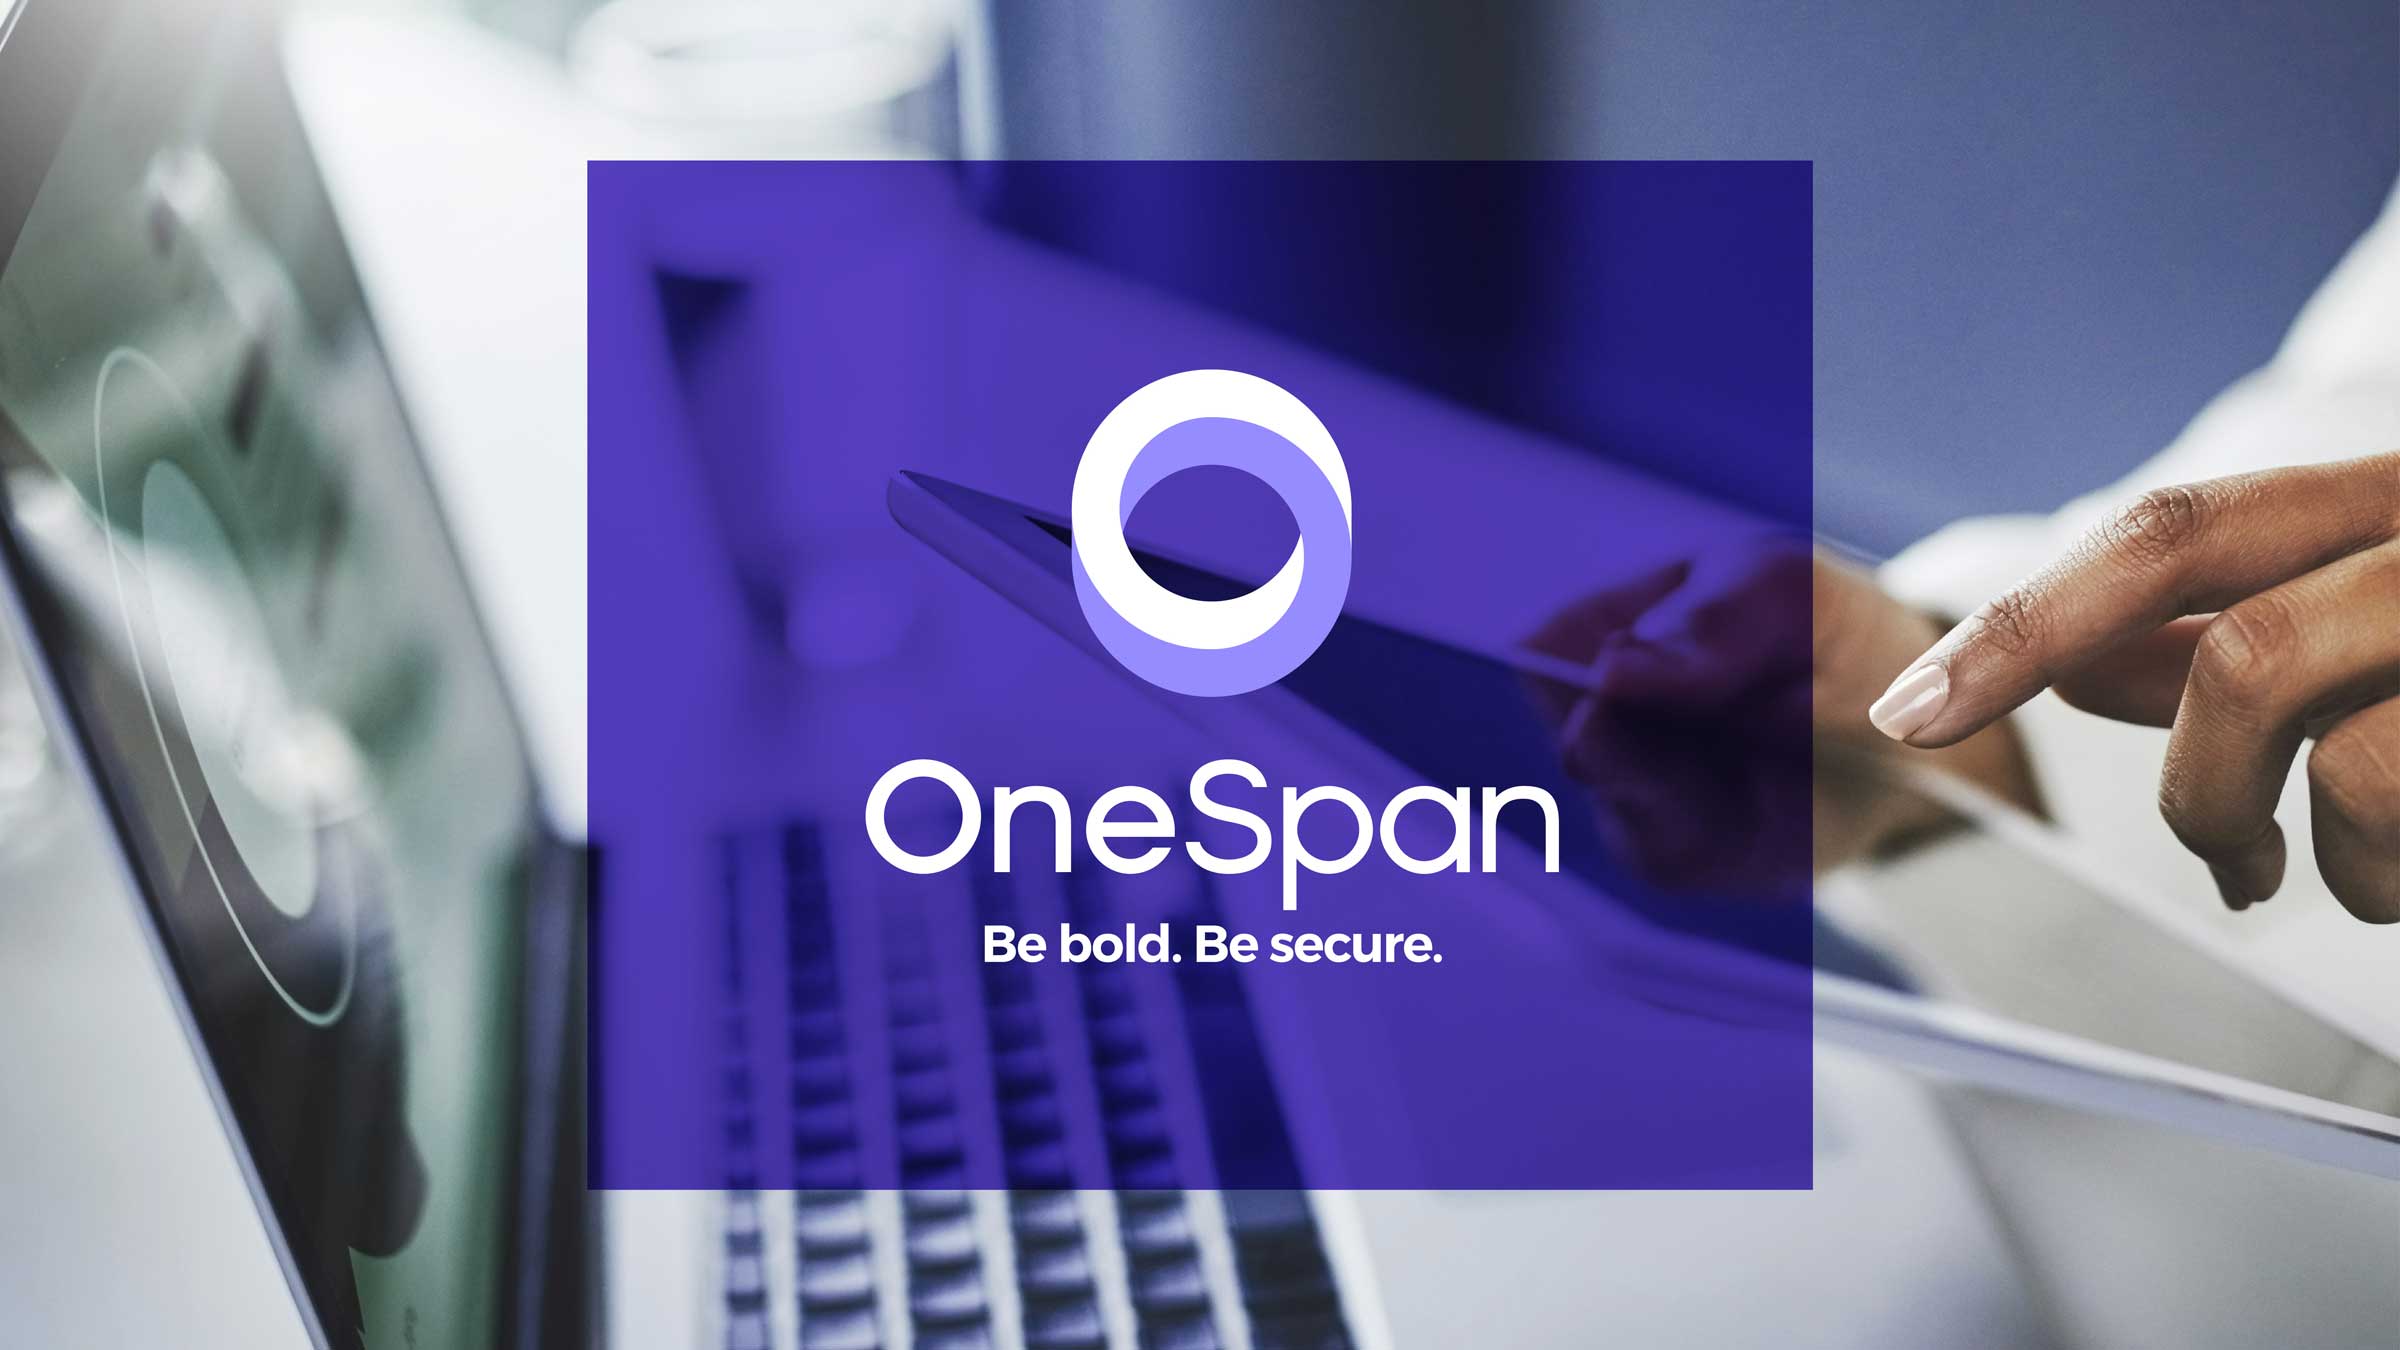 OneSpan Brand Image